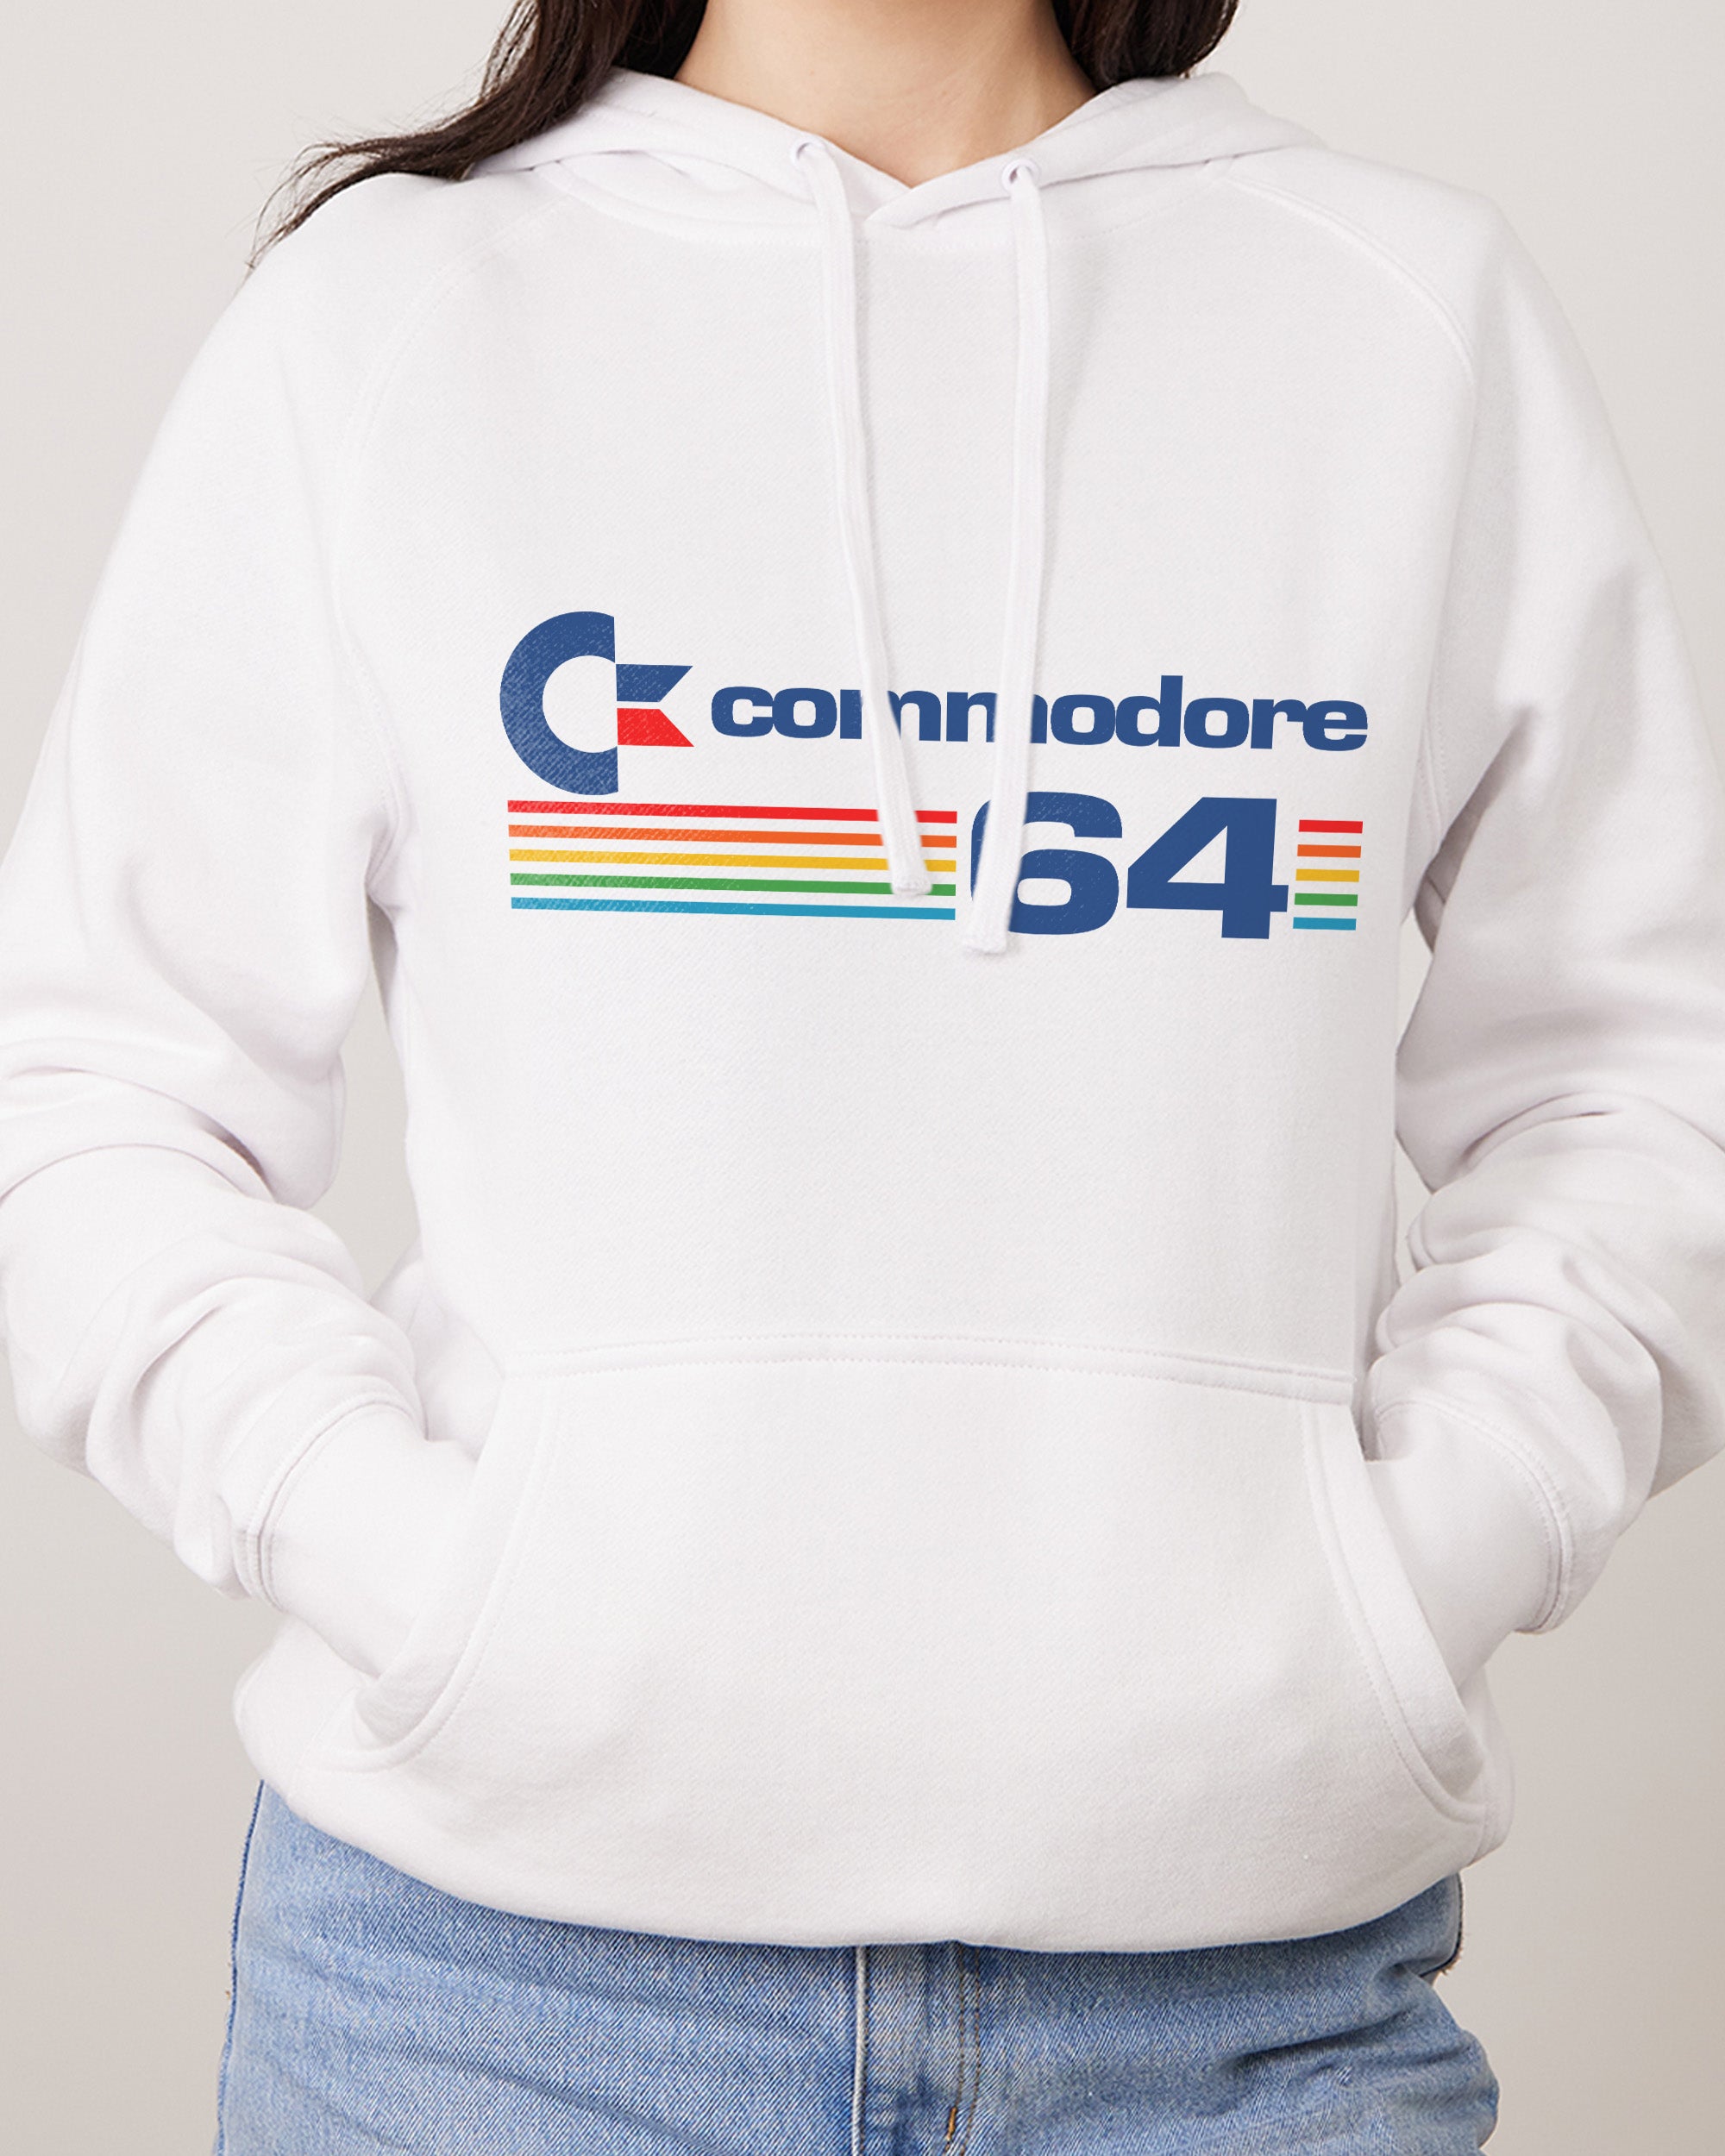 Commodore 64 Hoodie Australia Online